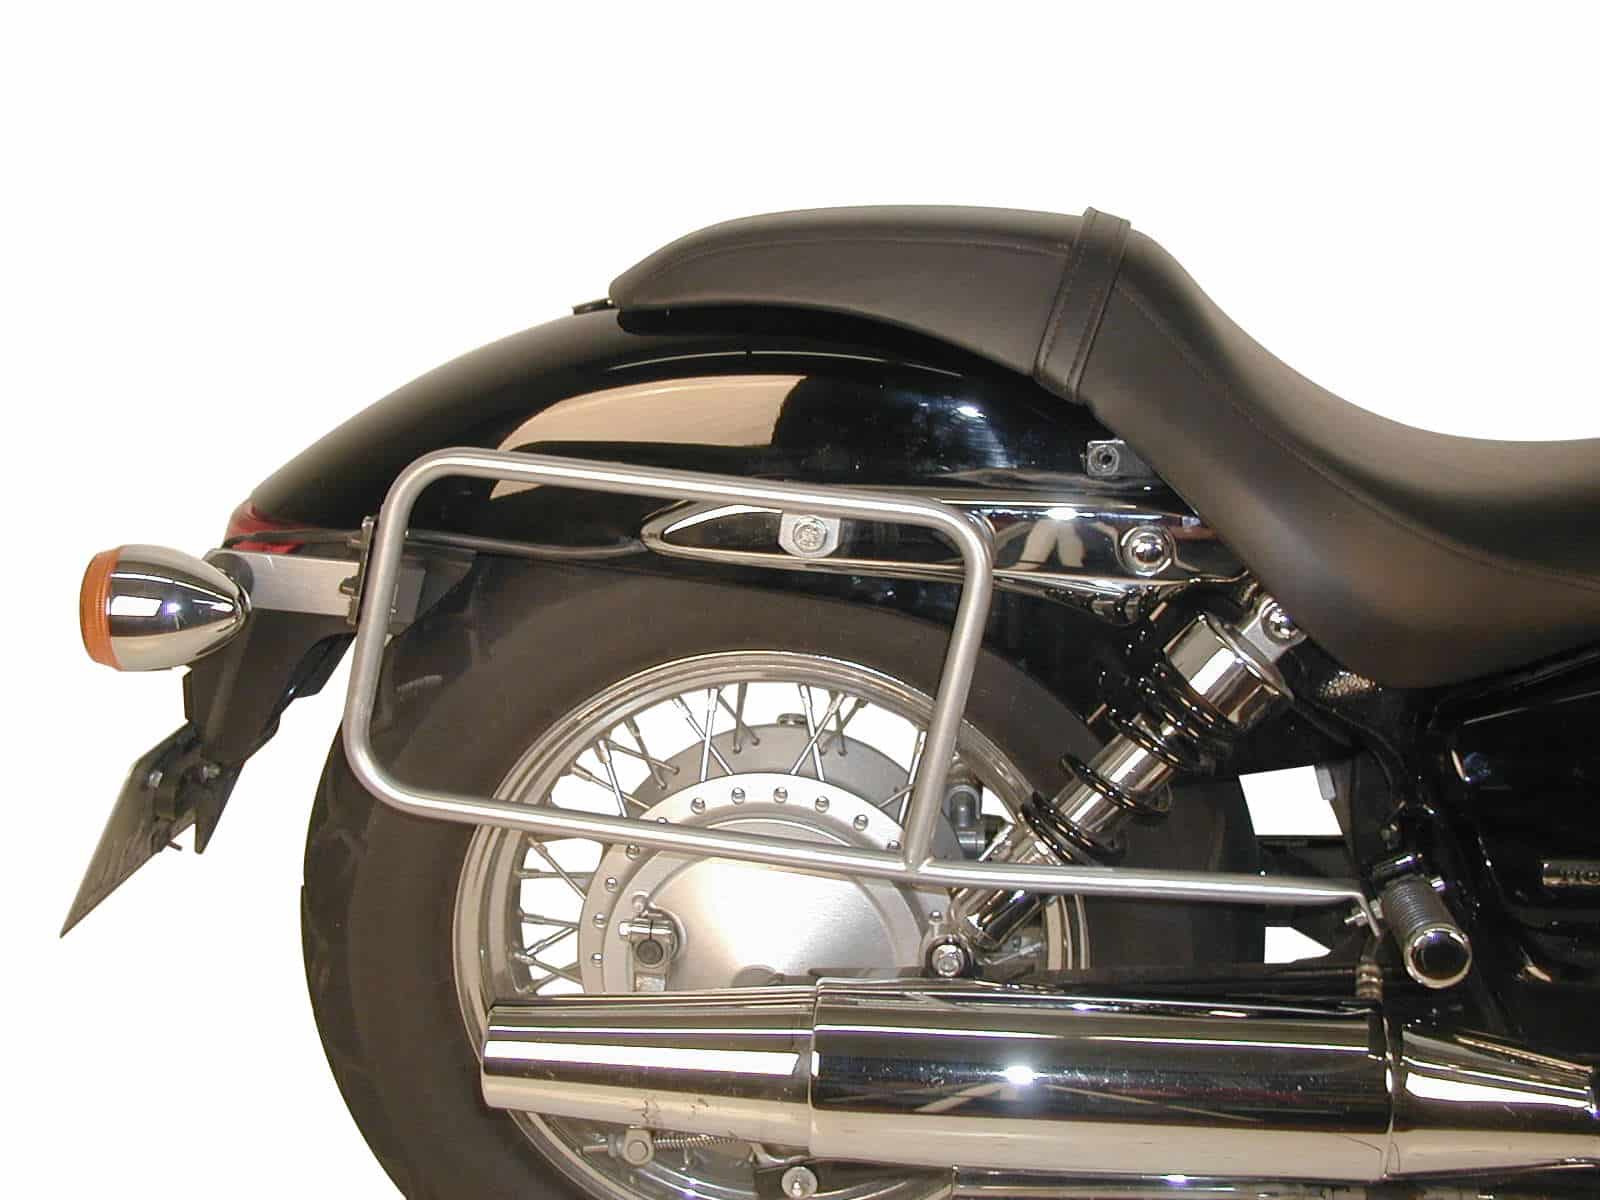 Sidecarrier permanent mounted chrome for Honda VT 750 Shadow Spirit (2007-2013)